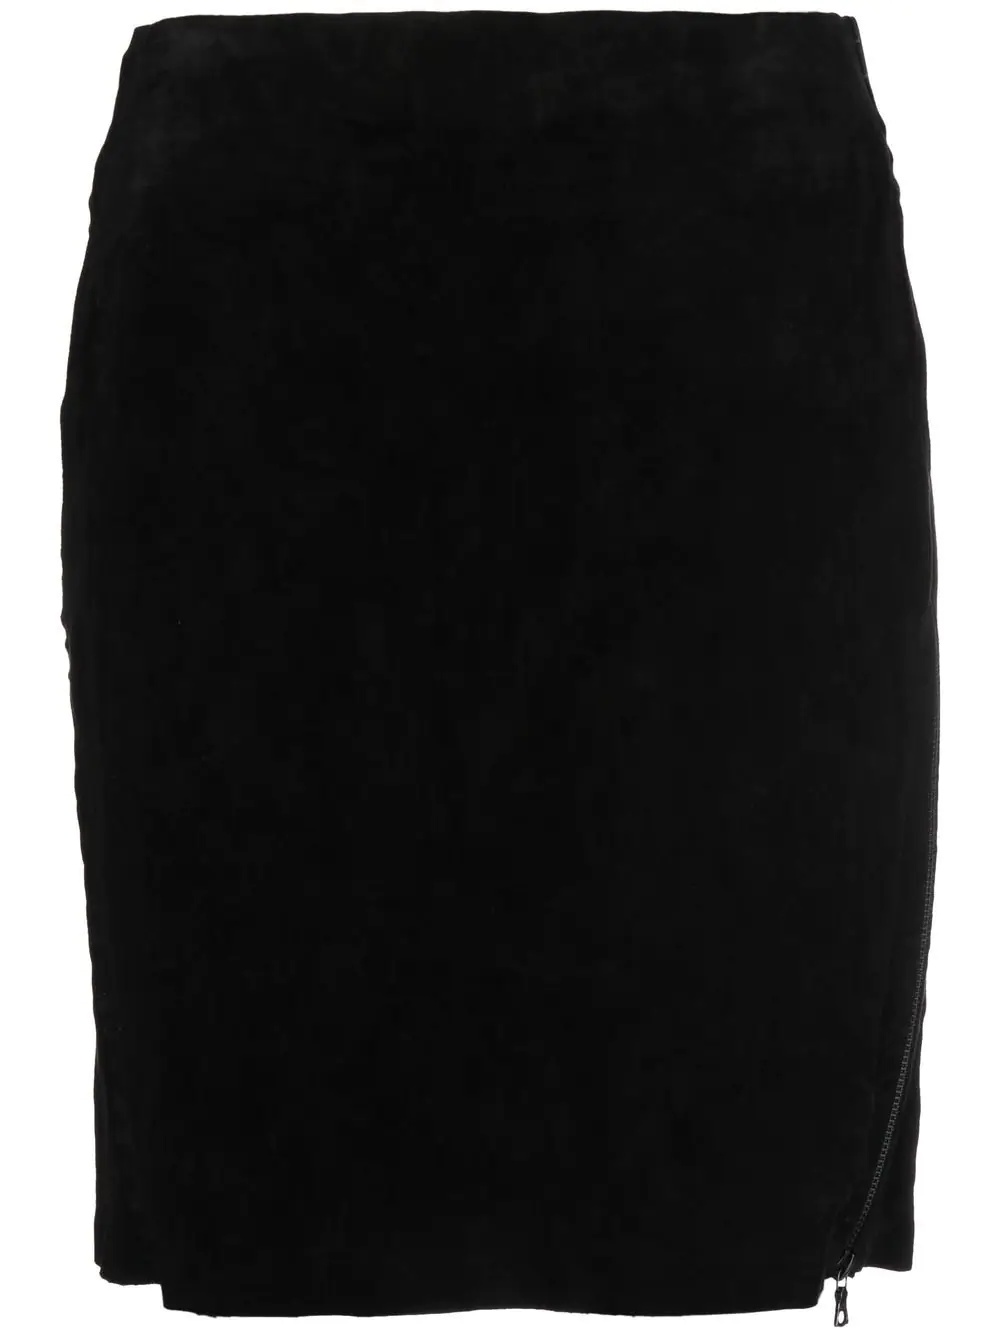 stitch-detail leather skirt - 1